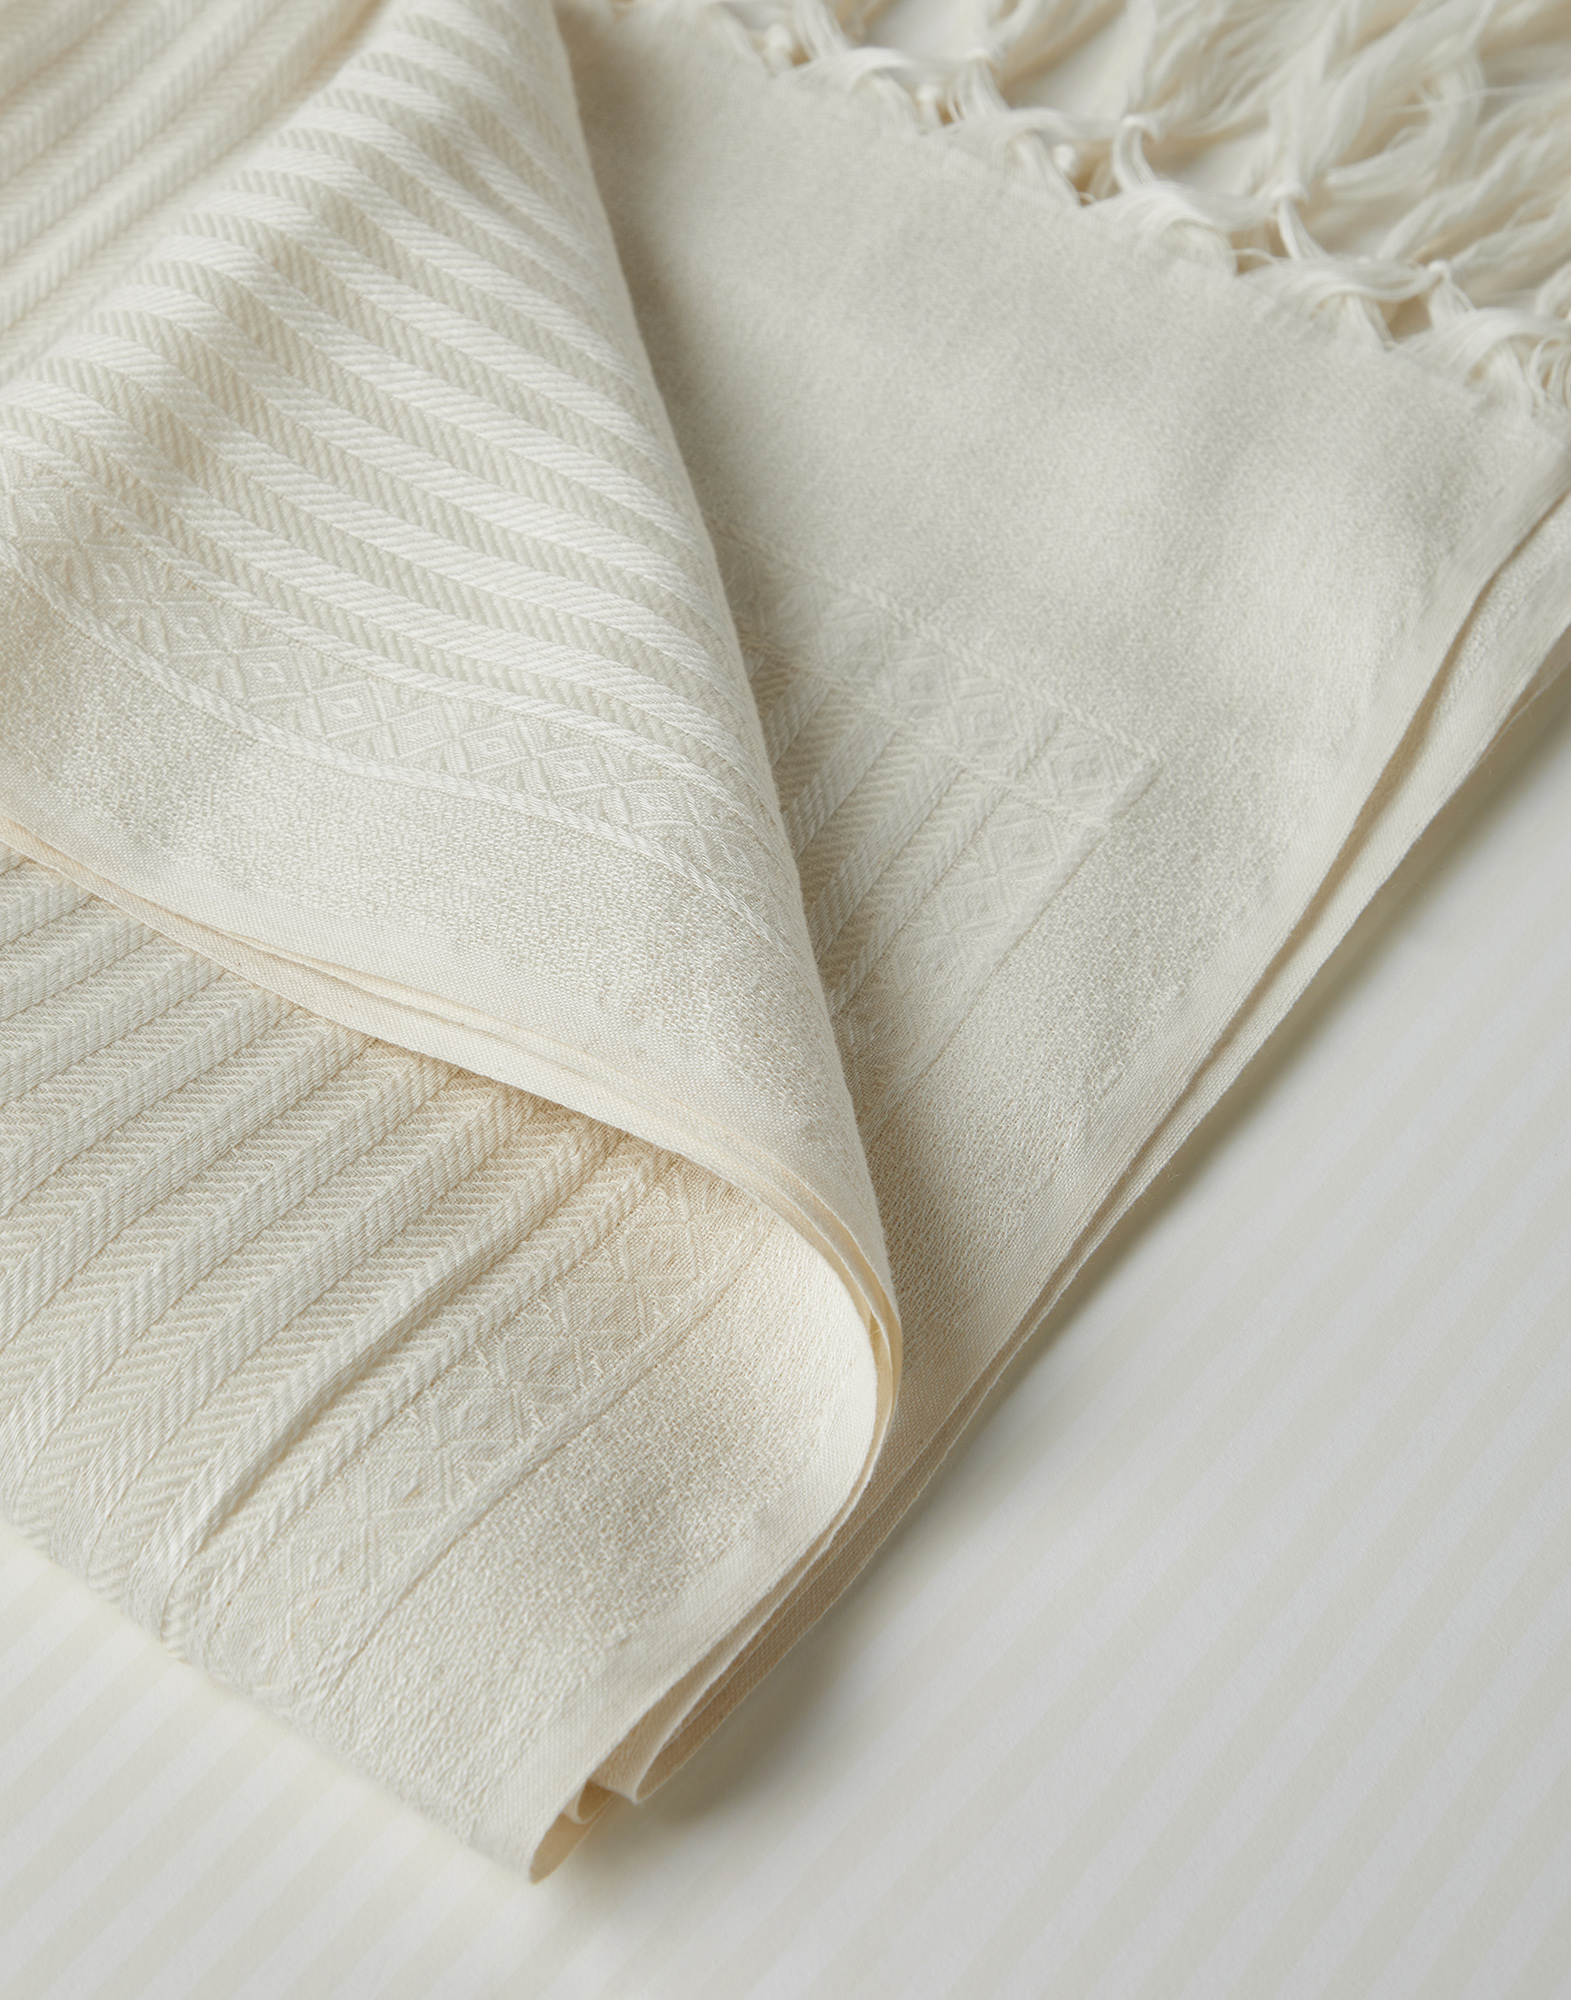 Pair of "Winter in White" towels Ecru Lifestyle - Brunello Cucinelli